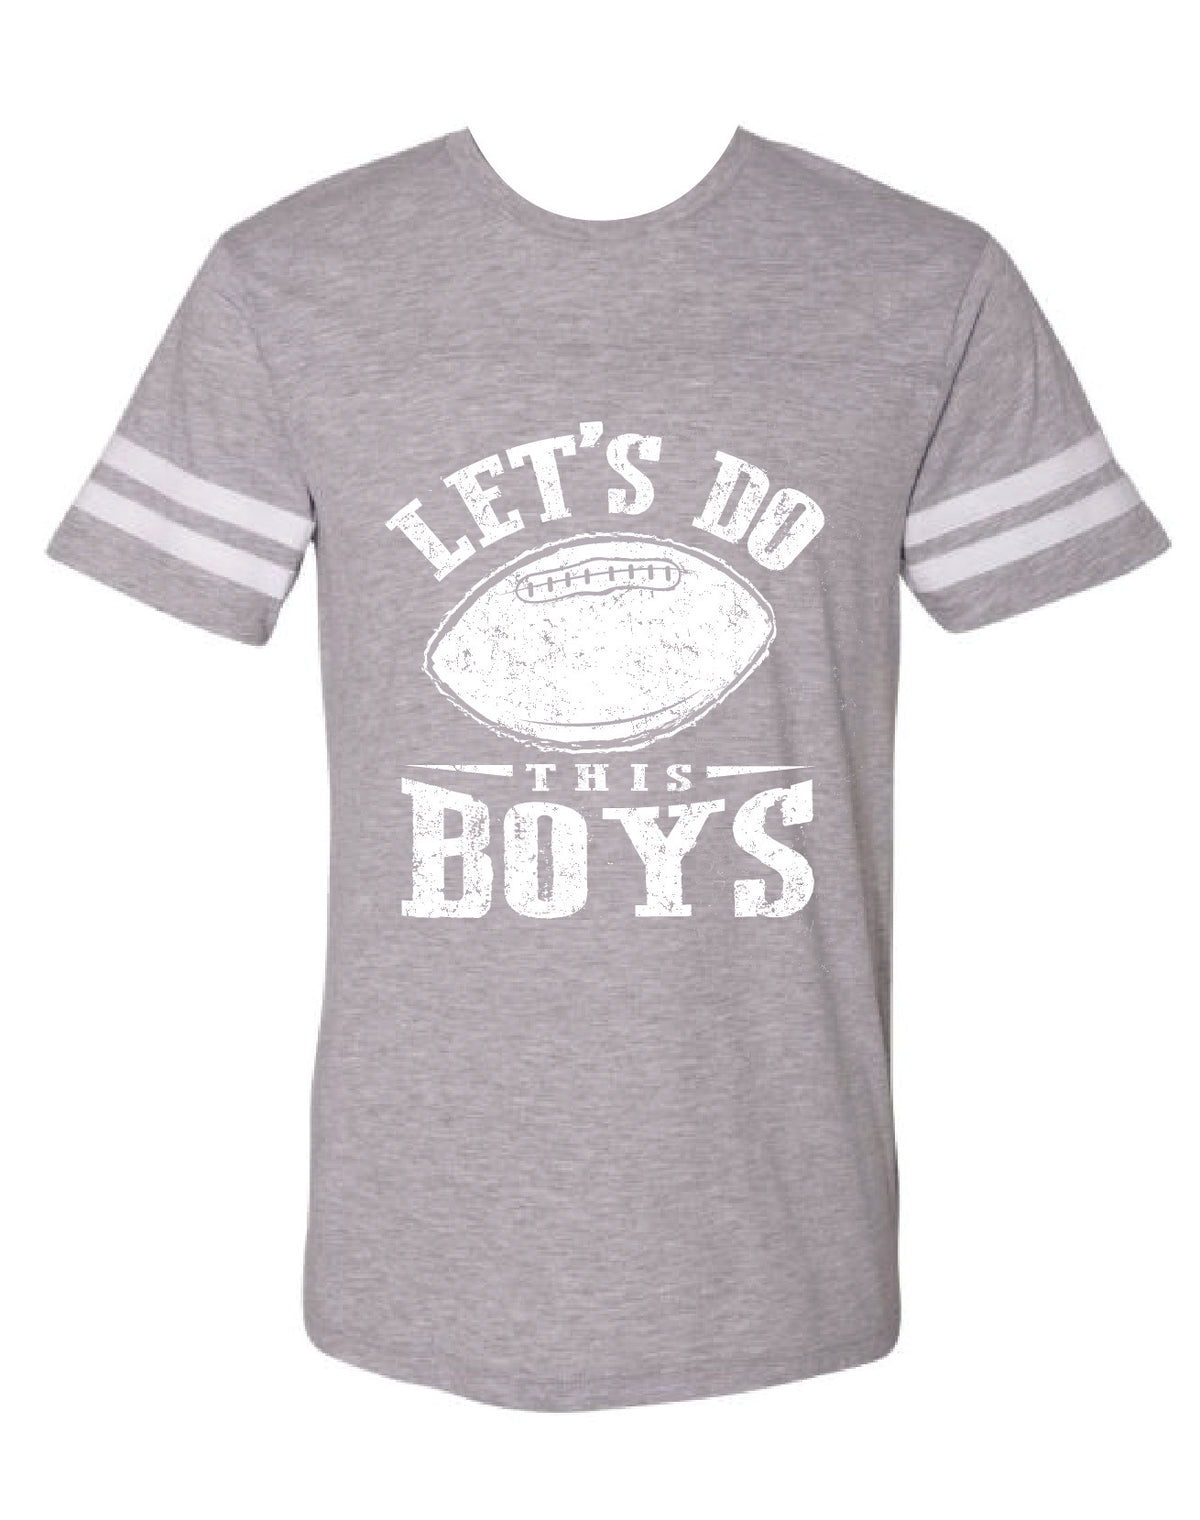 Let's Do This camiseta atlética gris acero para niños